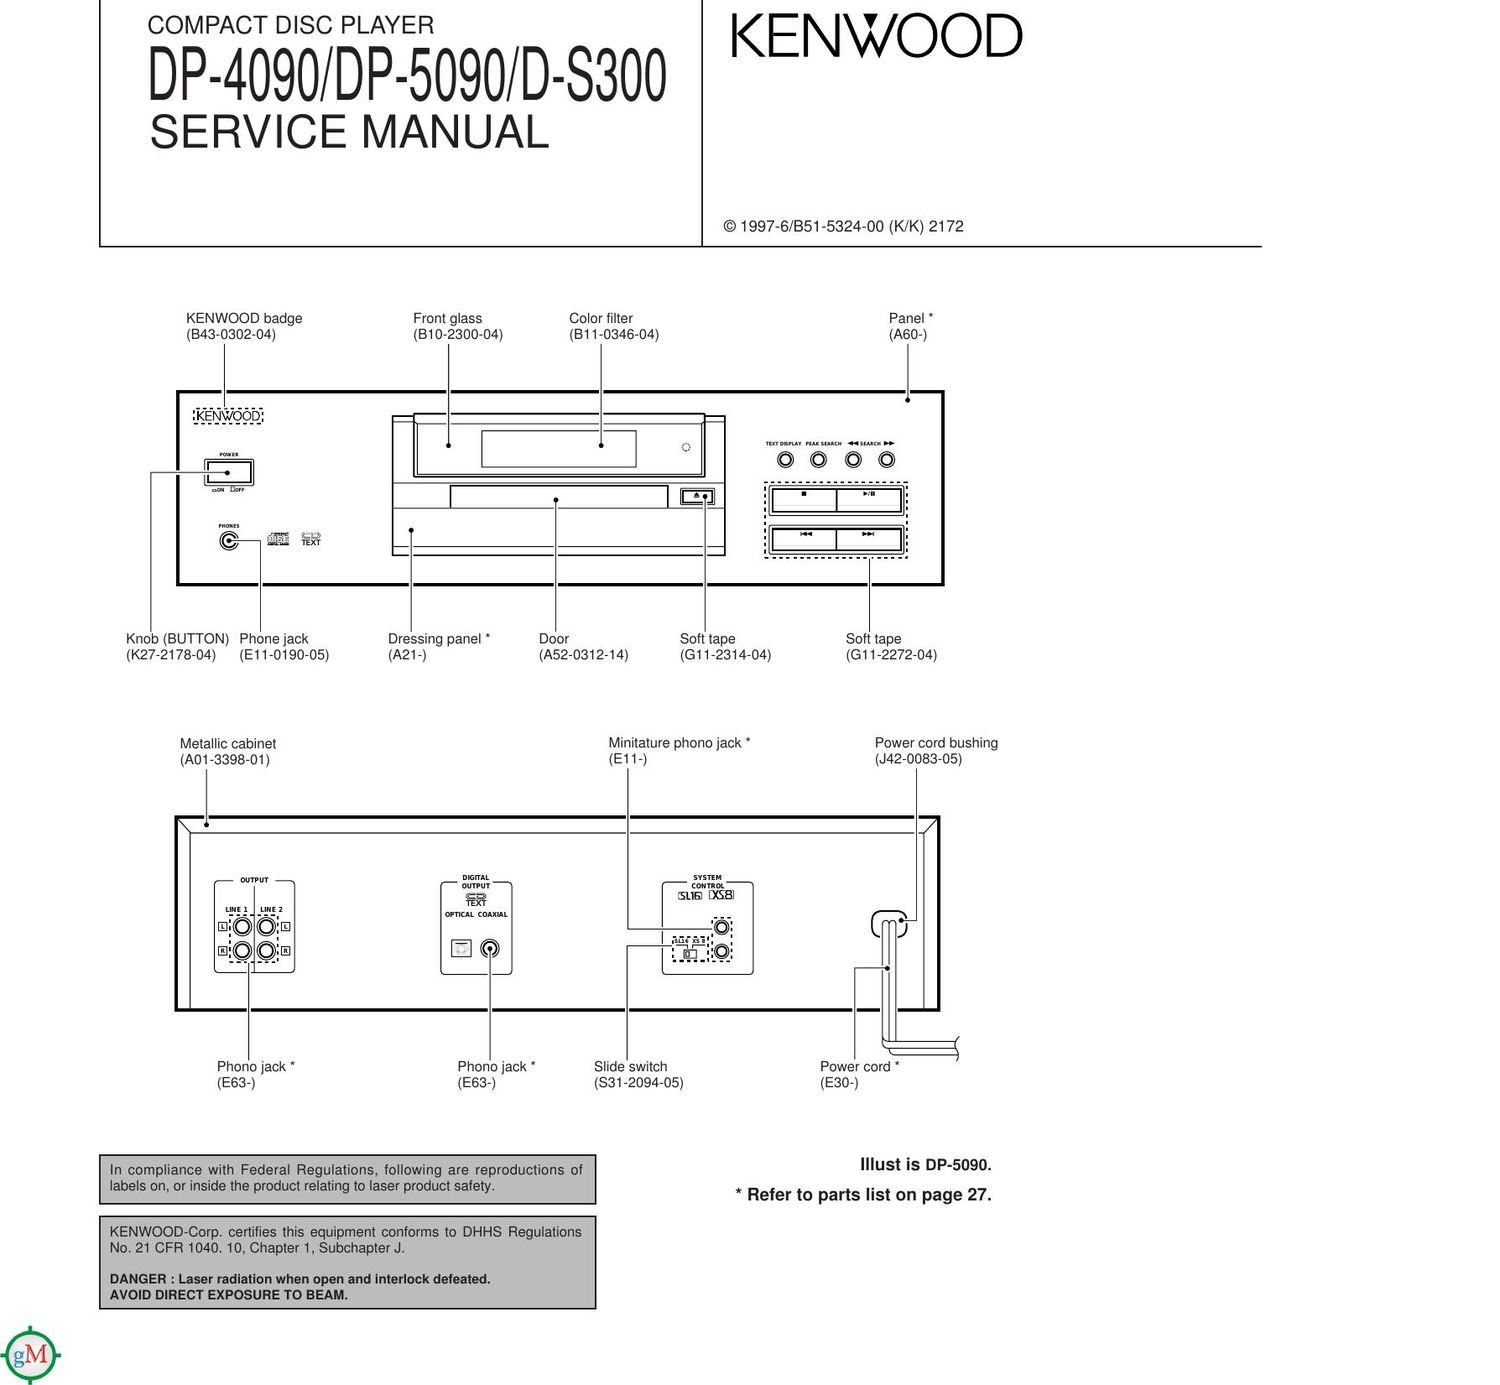 Kenwood DS 300 Service Manual